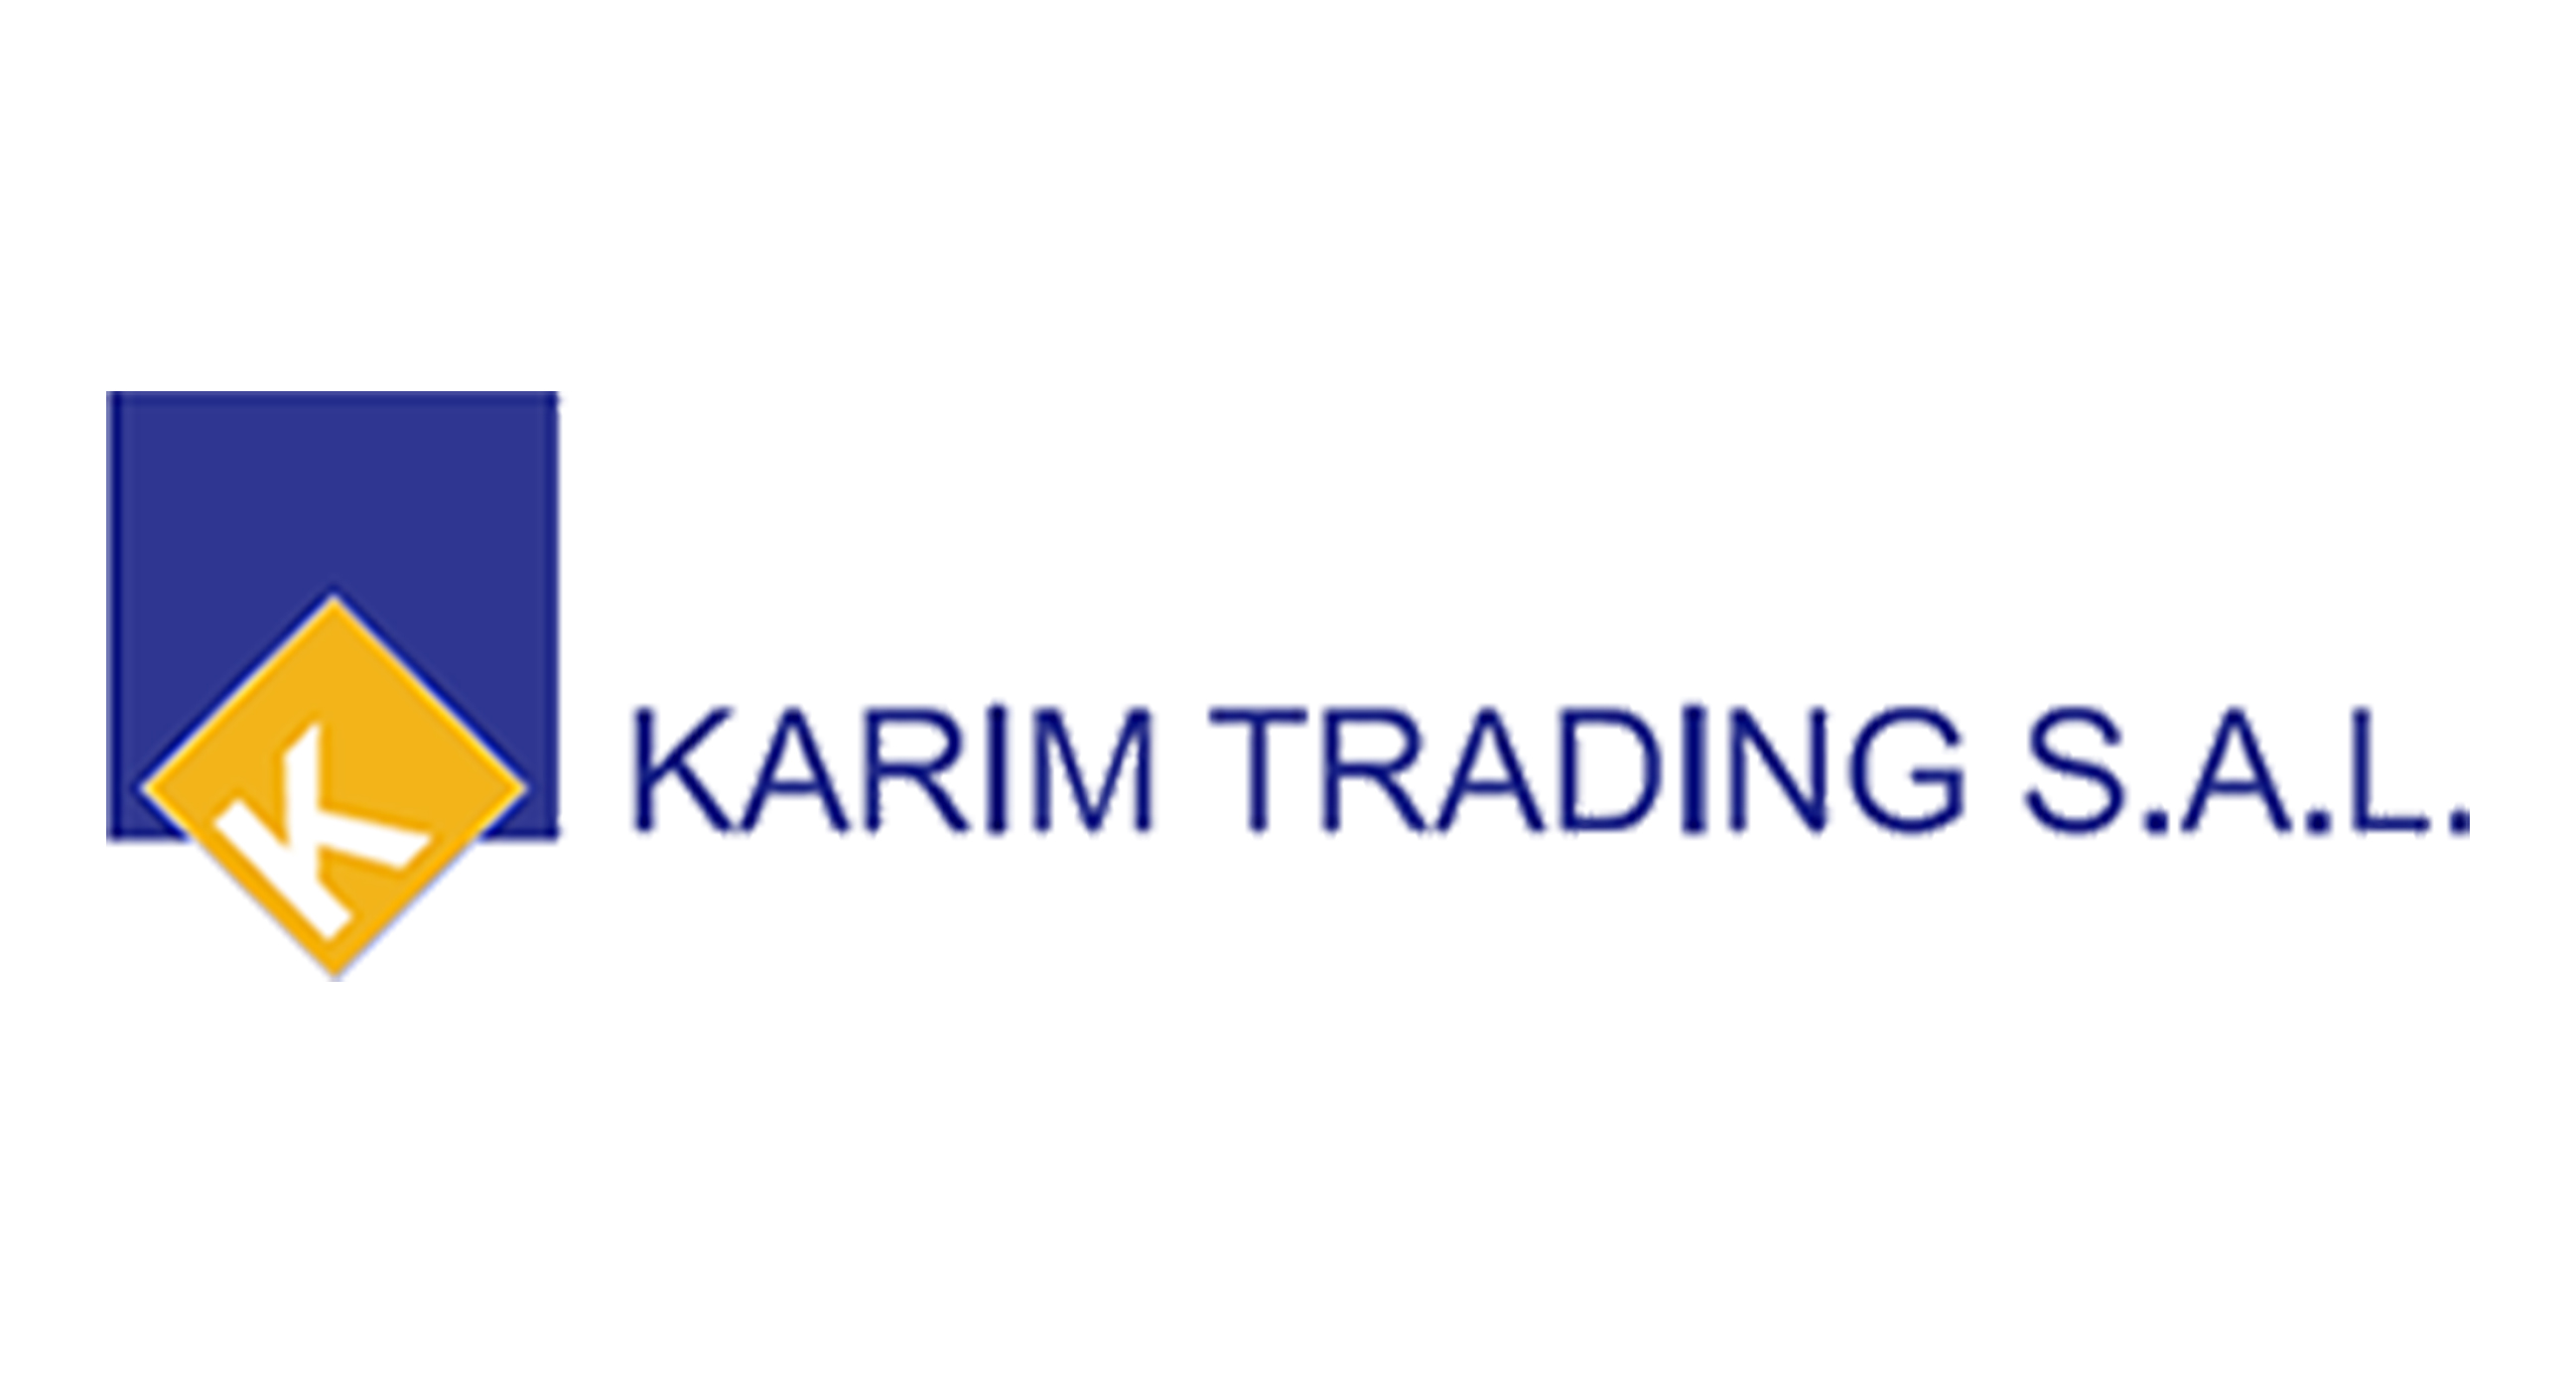 Karim Trading s.a.l